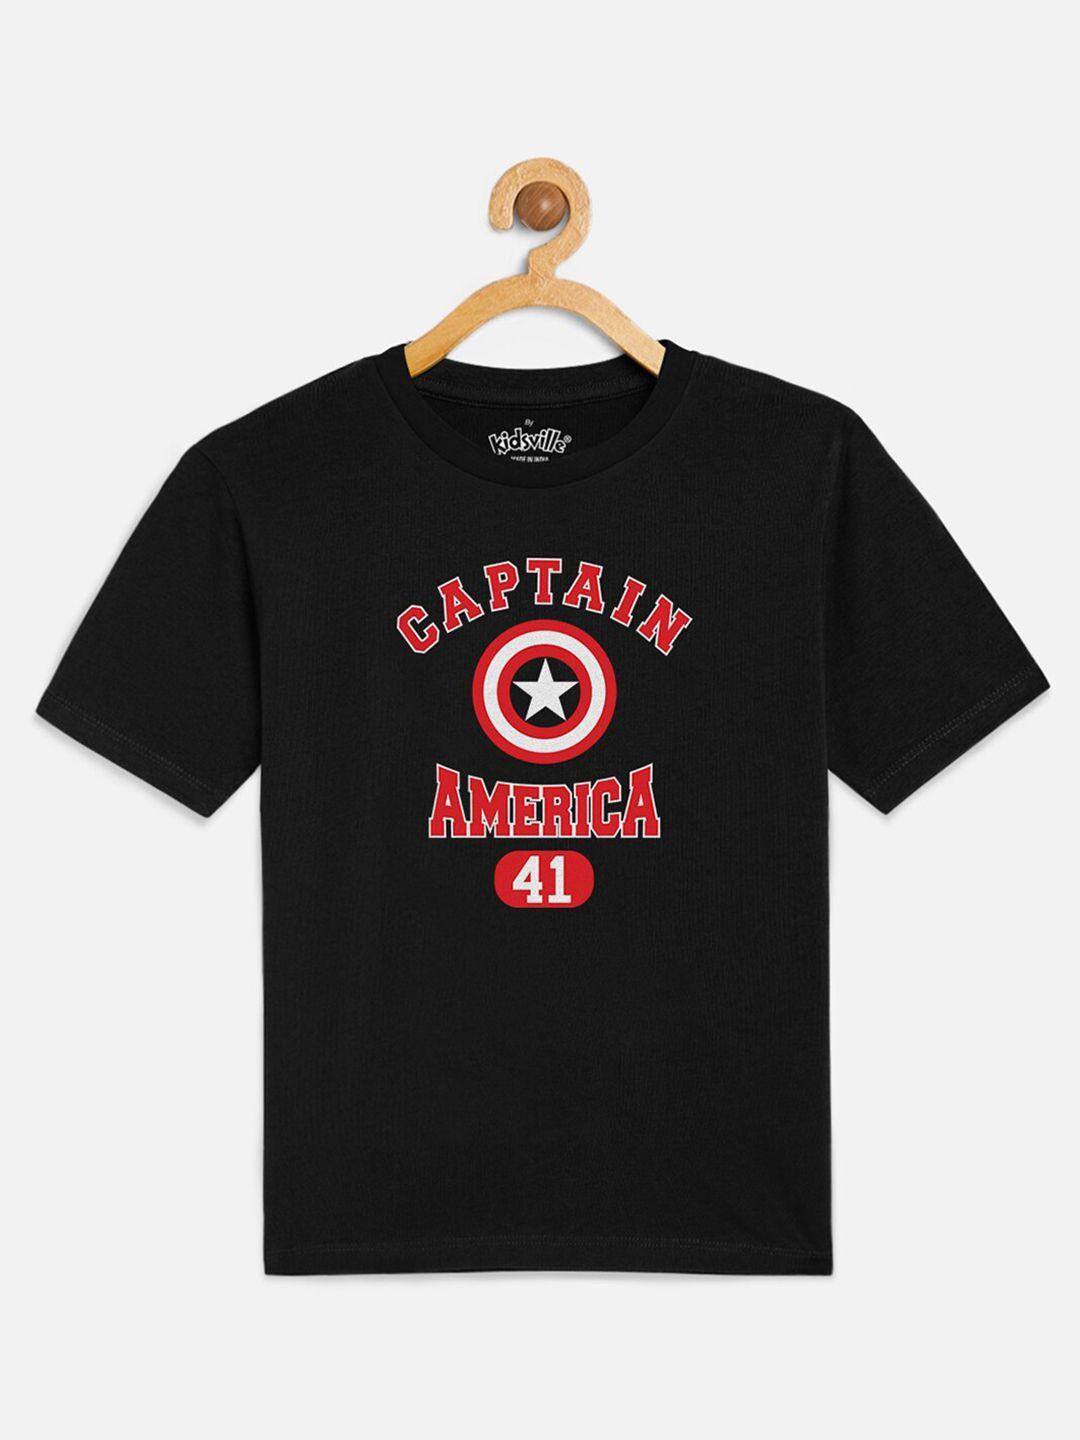 kids ville boys black captain america printed round neck pure cotton t-shirt